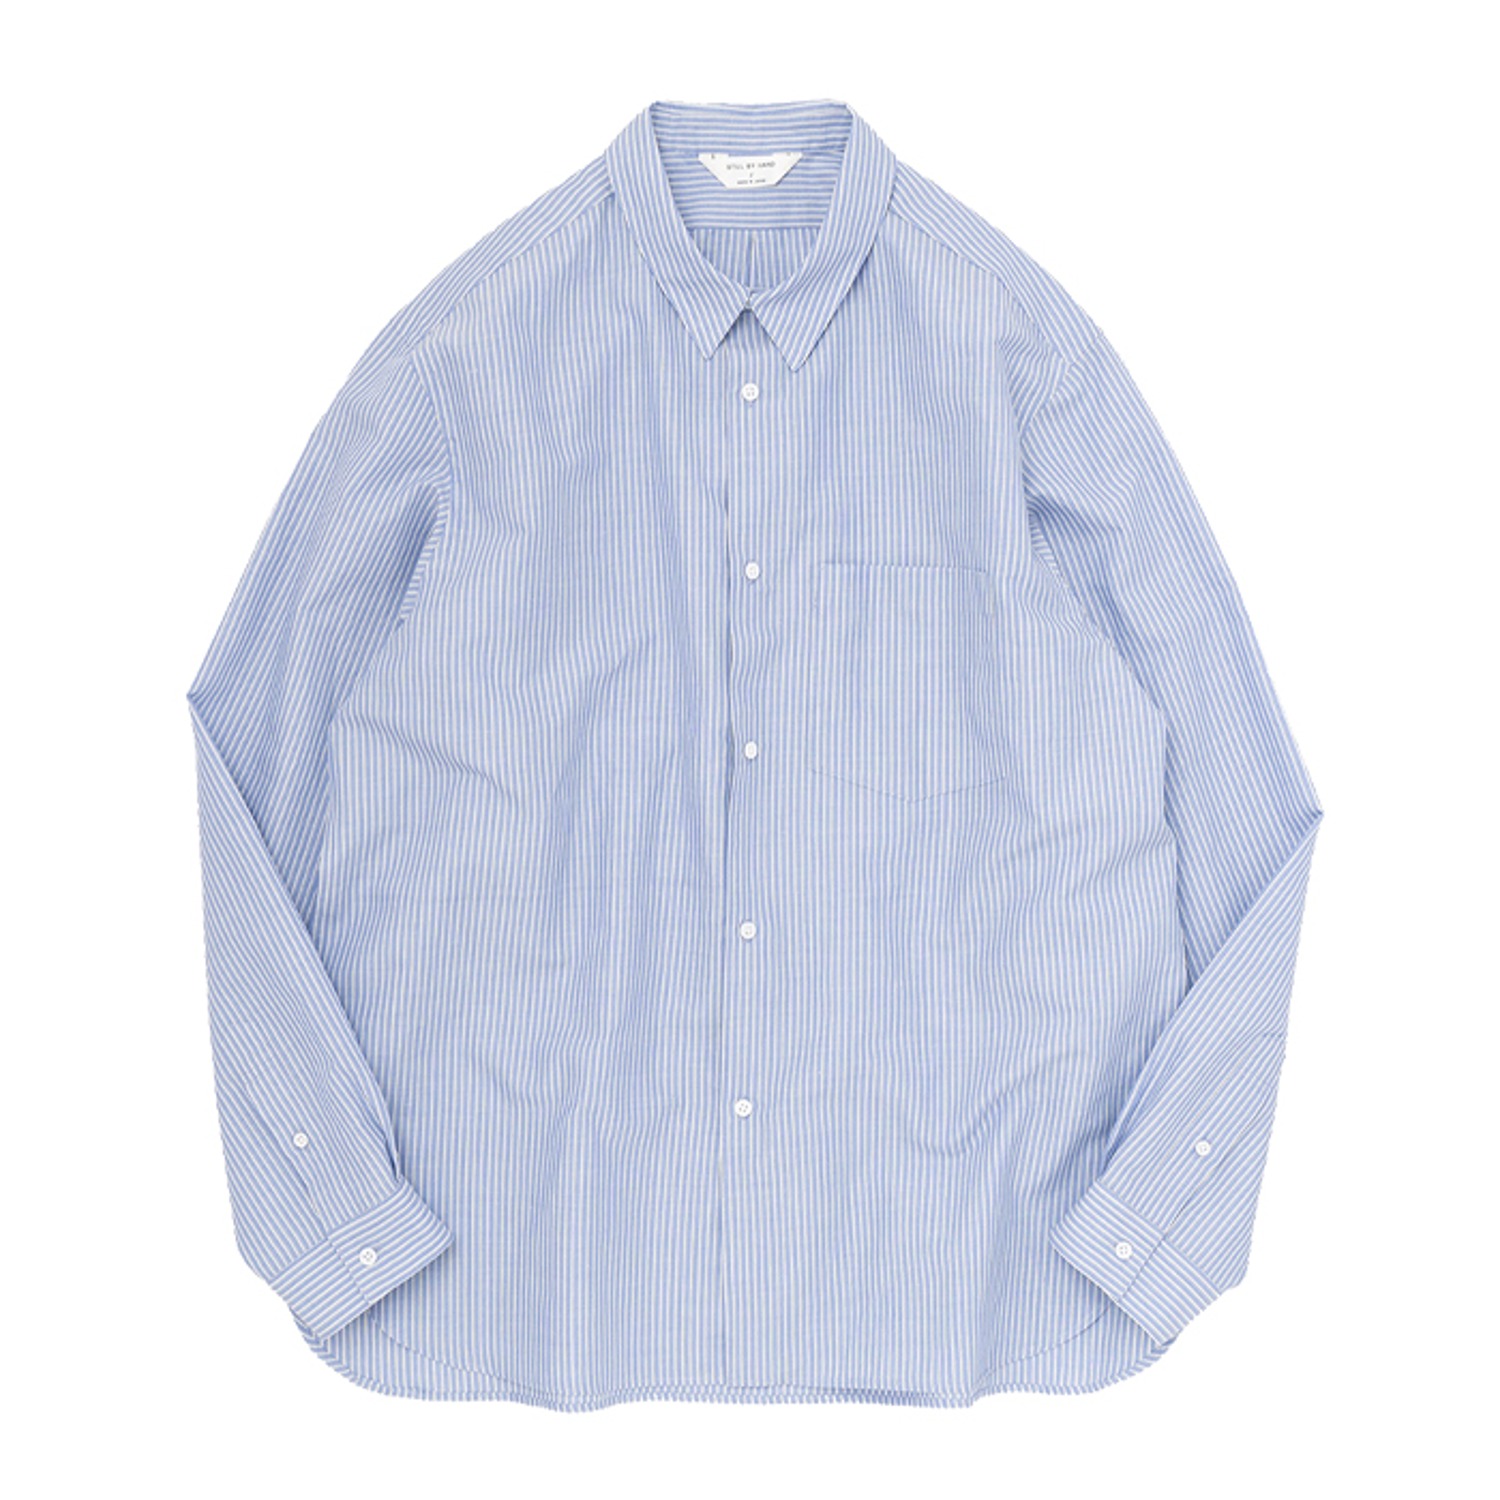 Regular collar shirt blue stripe